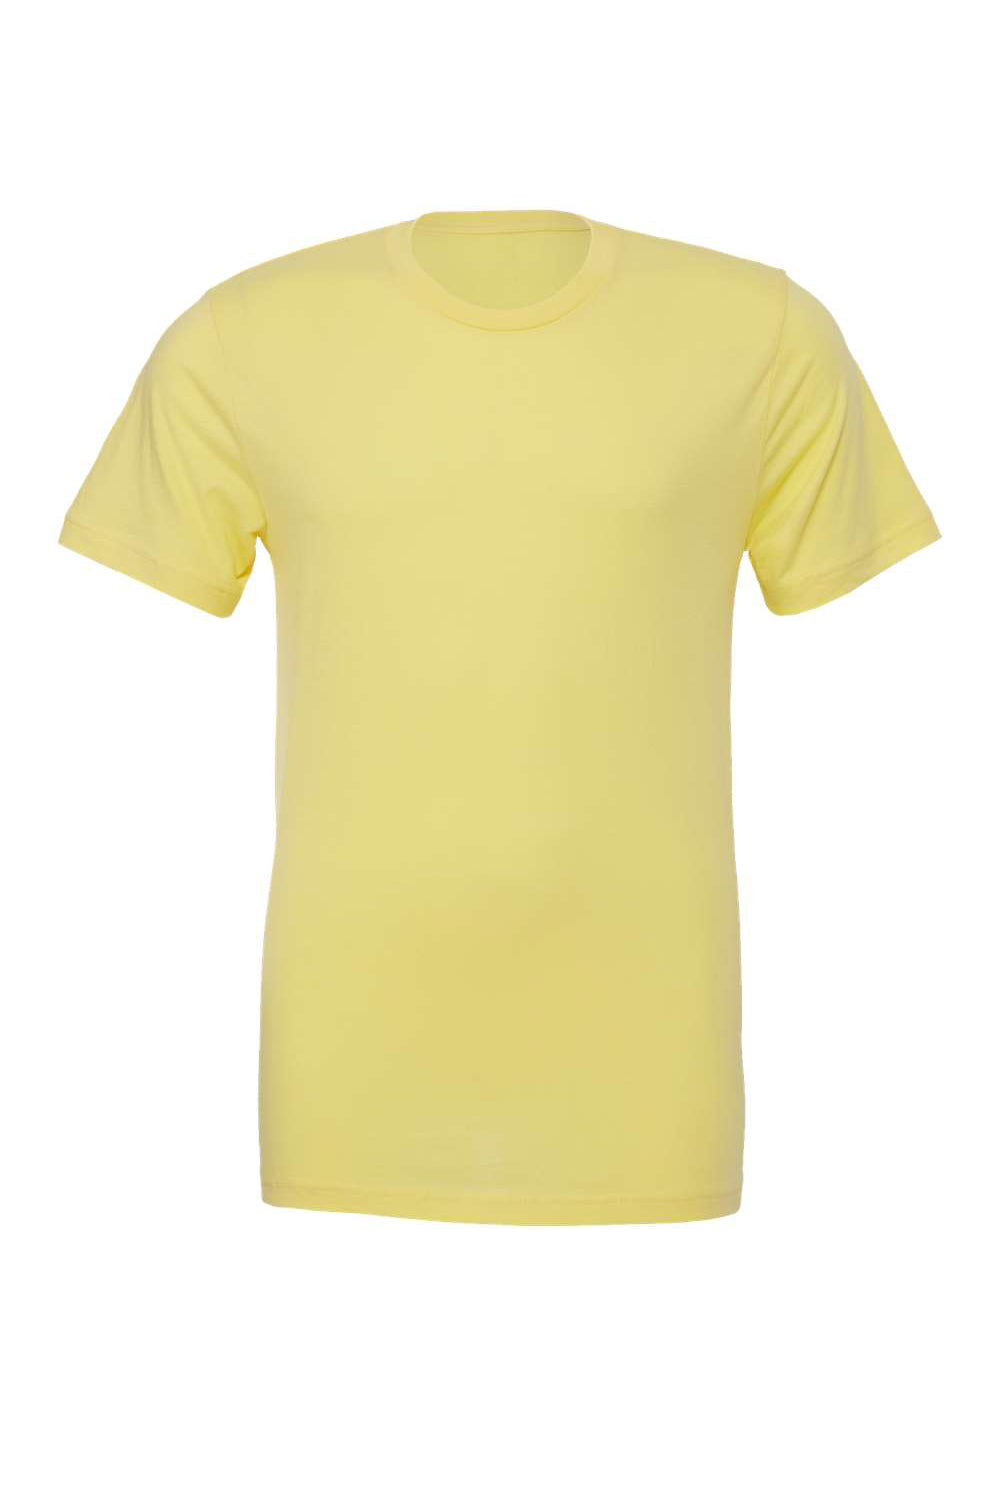 Bella + Canvas BC3001/3001C Mens Jersey Short Sleeve Crewneck T-Shirt Yellow Flat Front